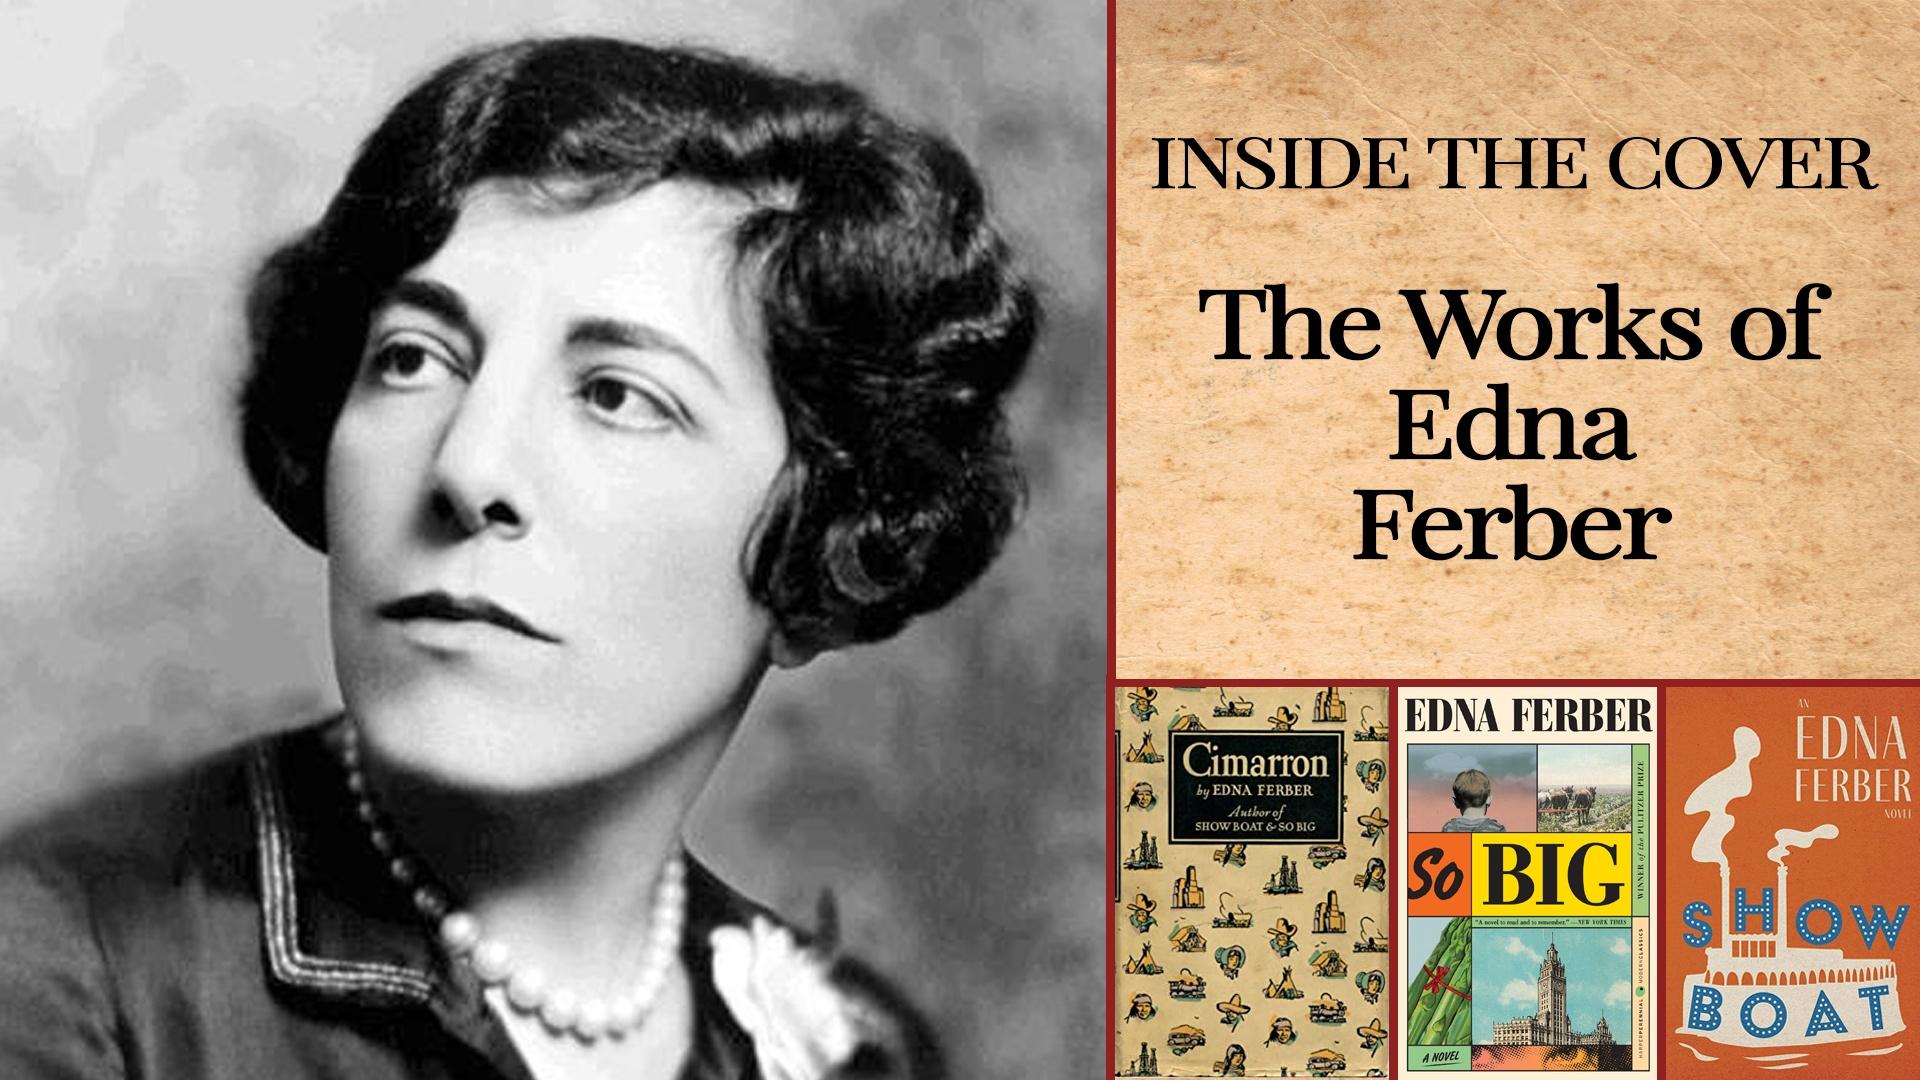 The Works of Edna Ferber